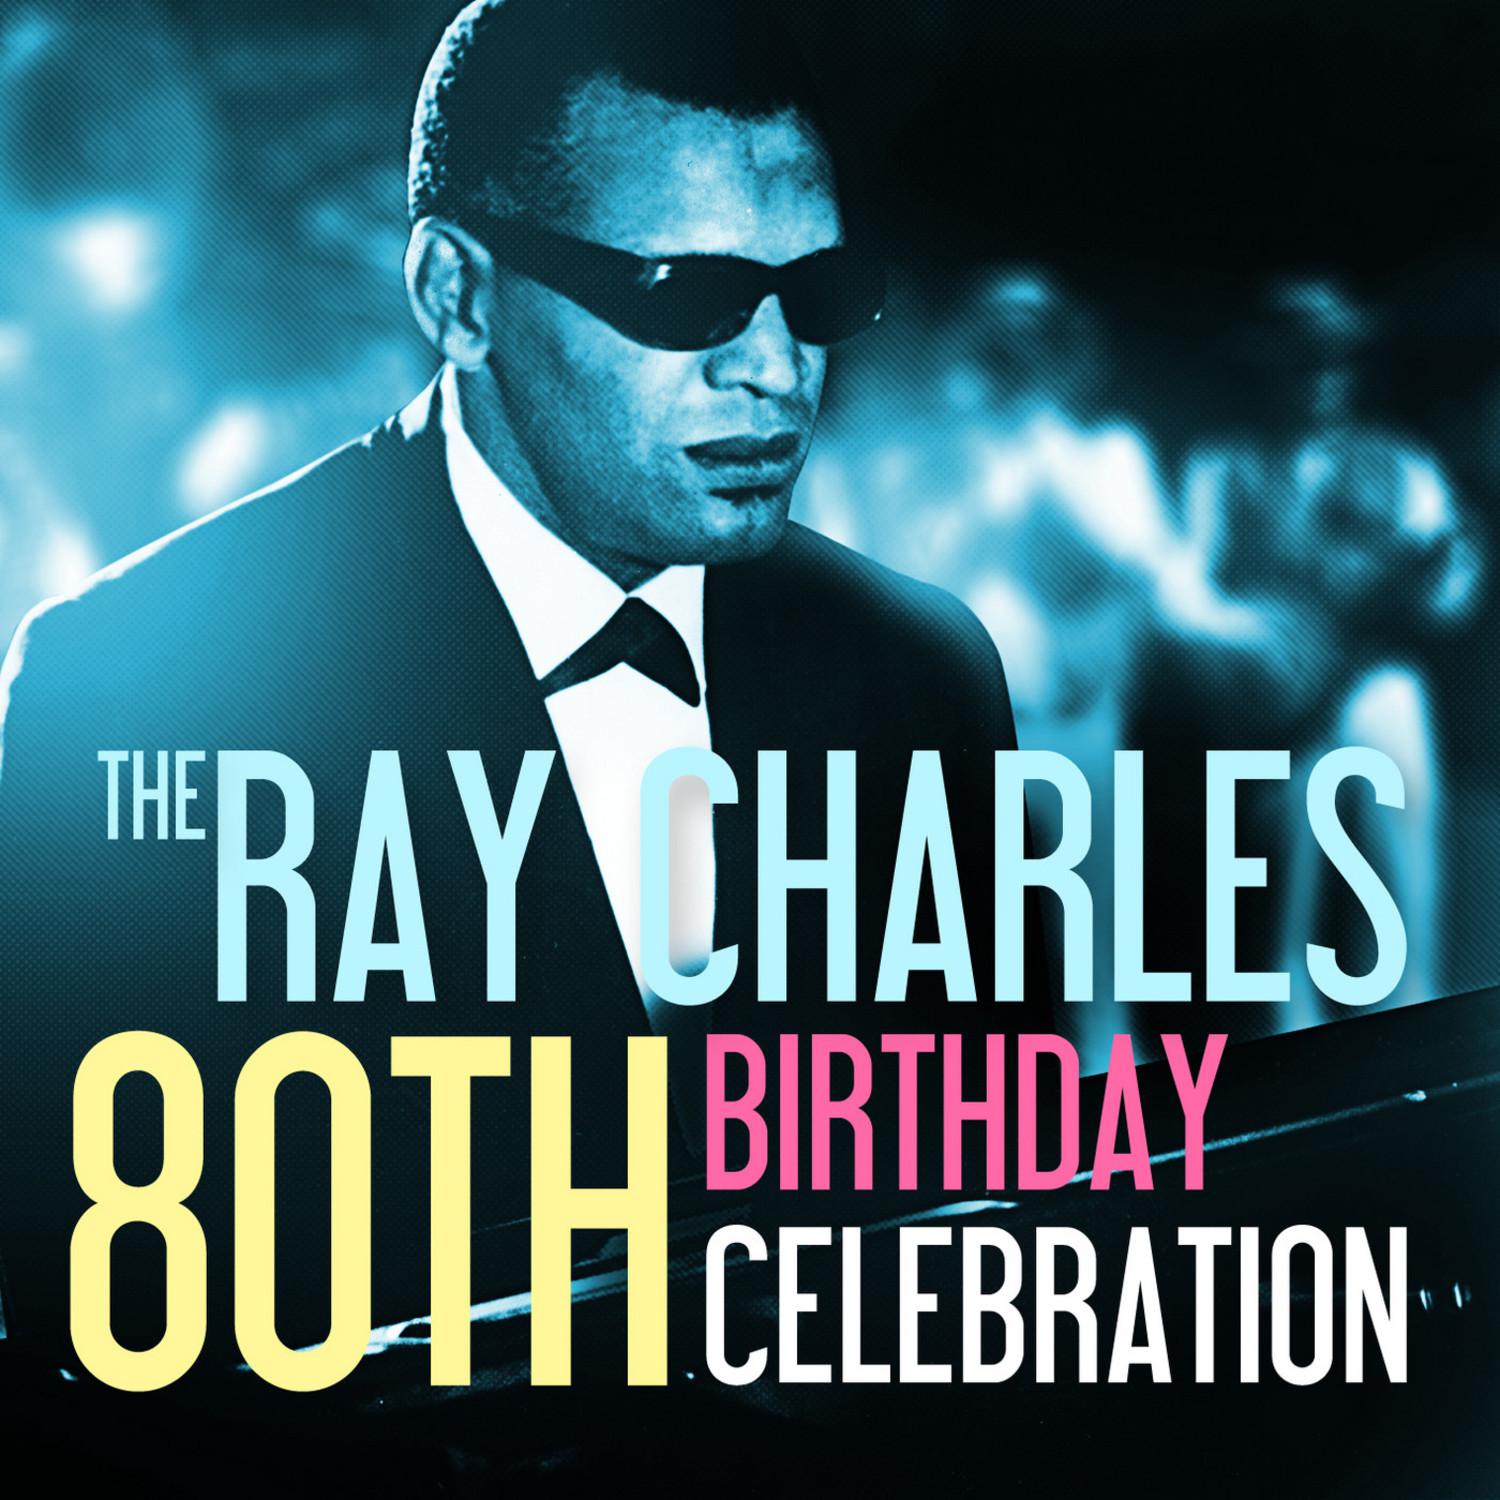 The Ray Charles 80th Birthday Celebration